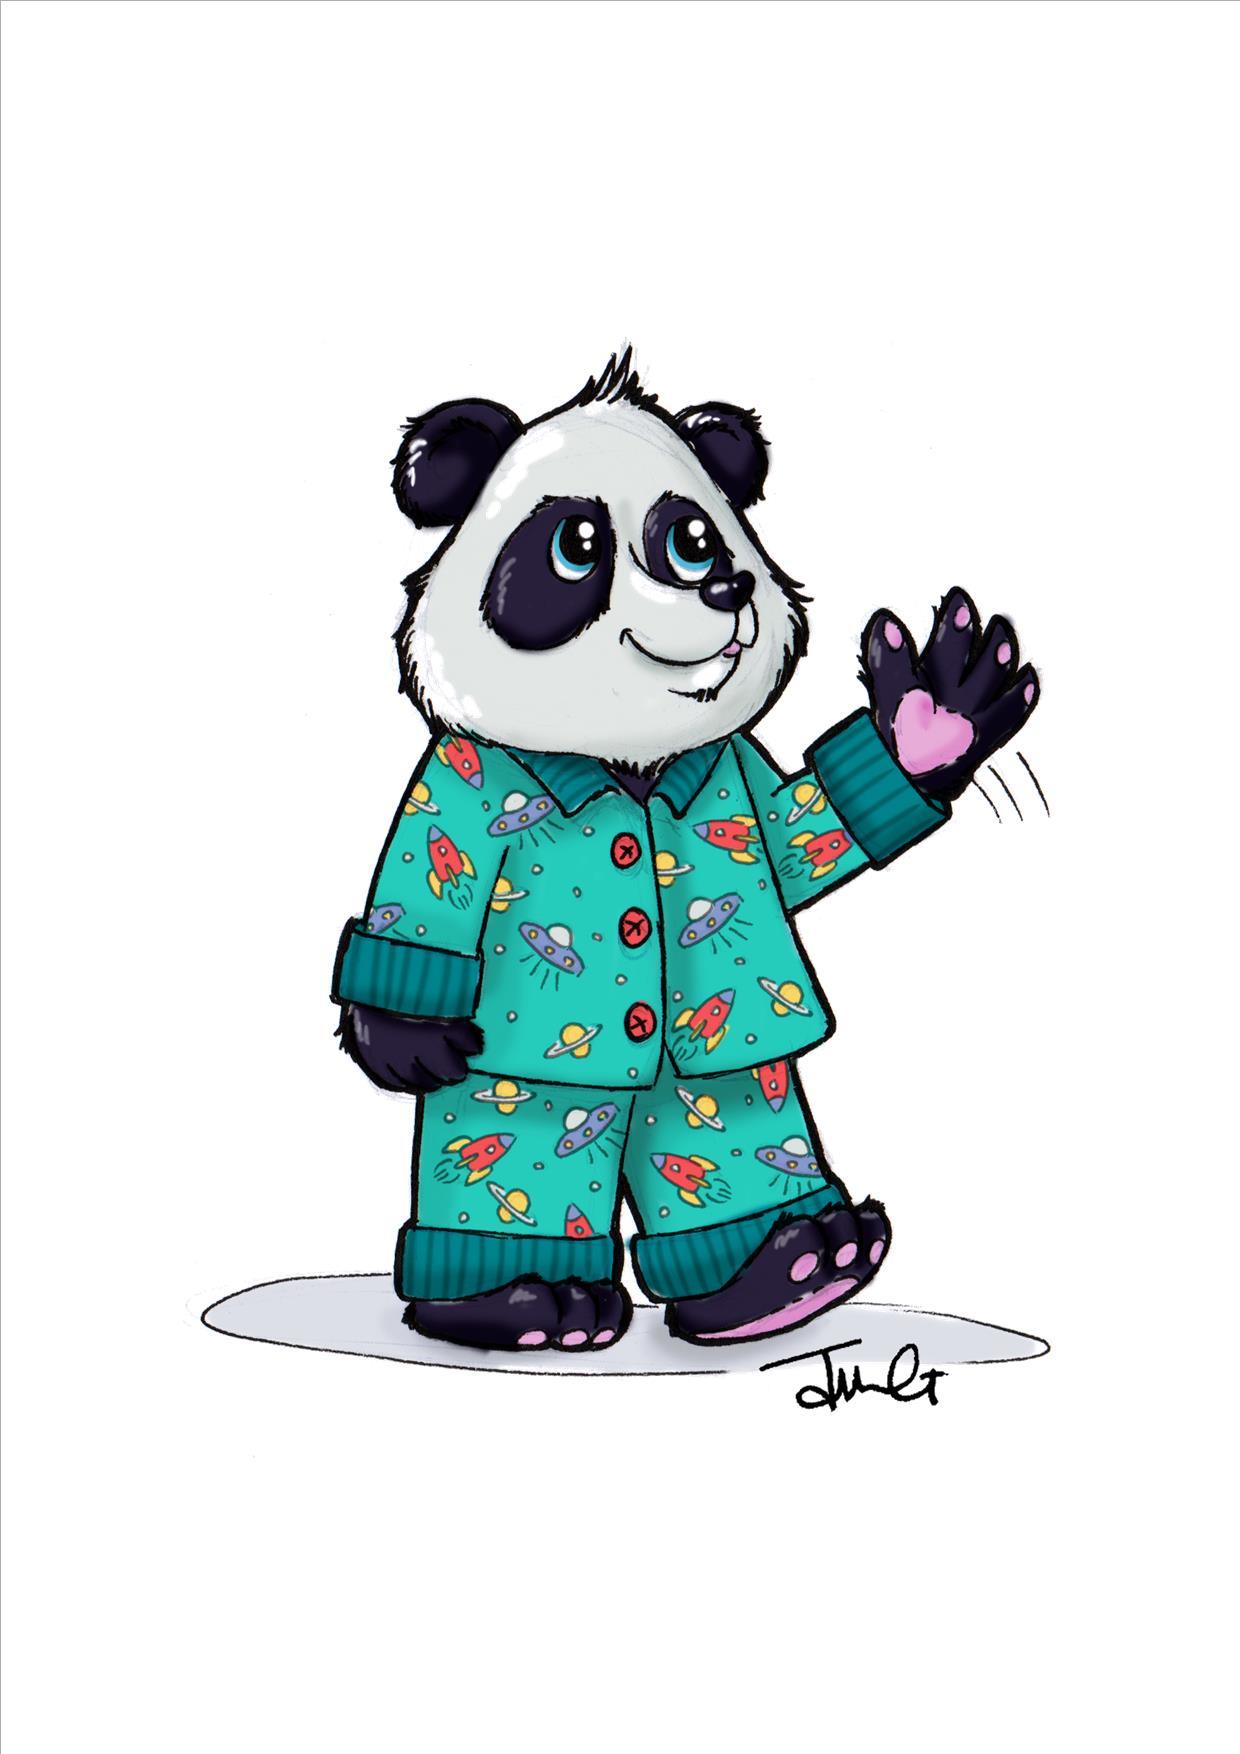 Jinnys creation - Preston Panda